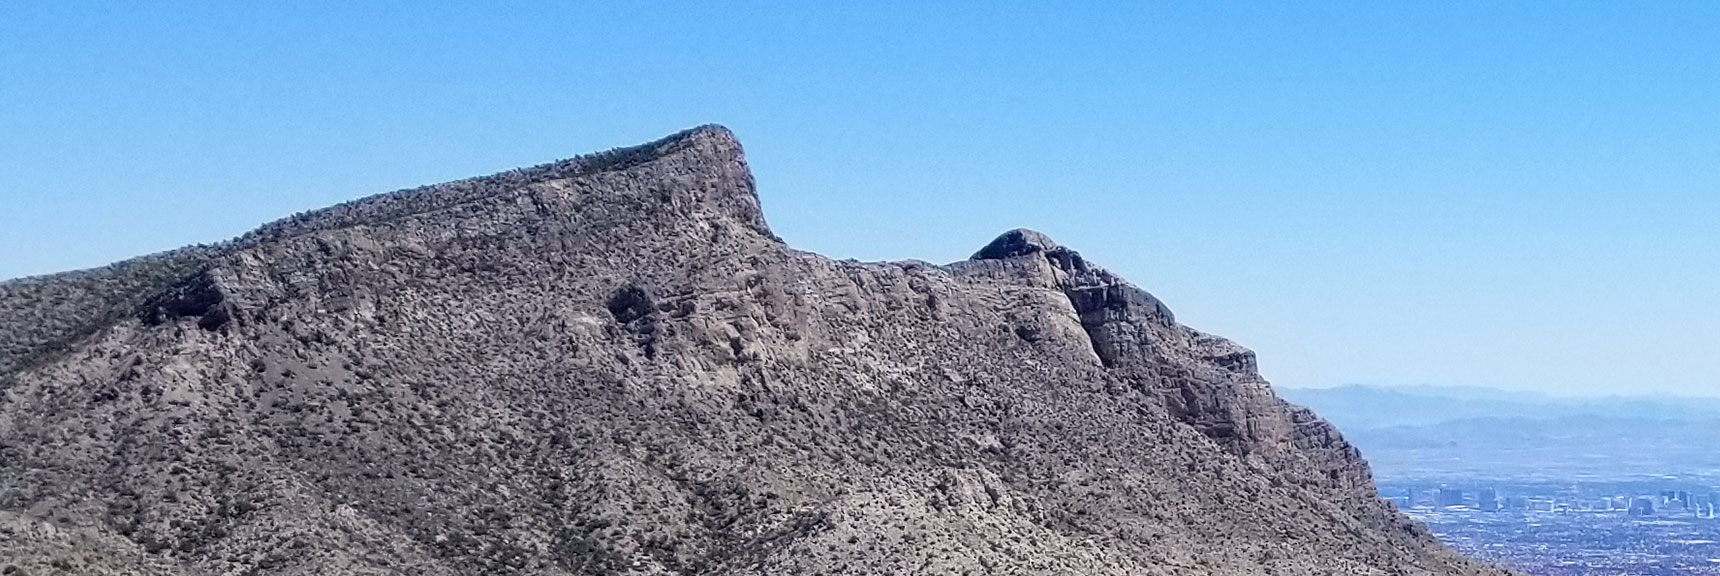 Damsel Peak Viewed from Keystone Thrust About 7800ft in La Madre Mountain Wilderness, Nevada